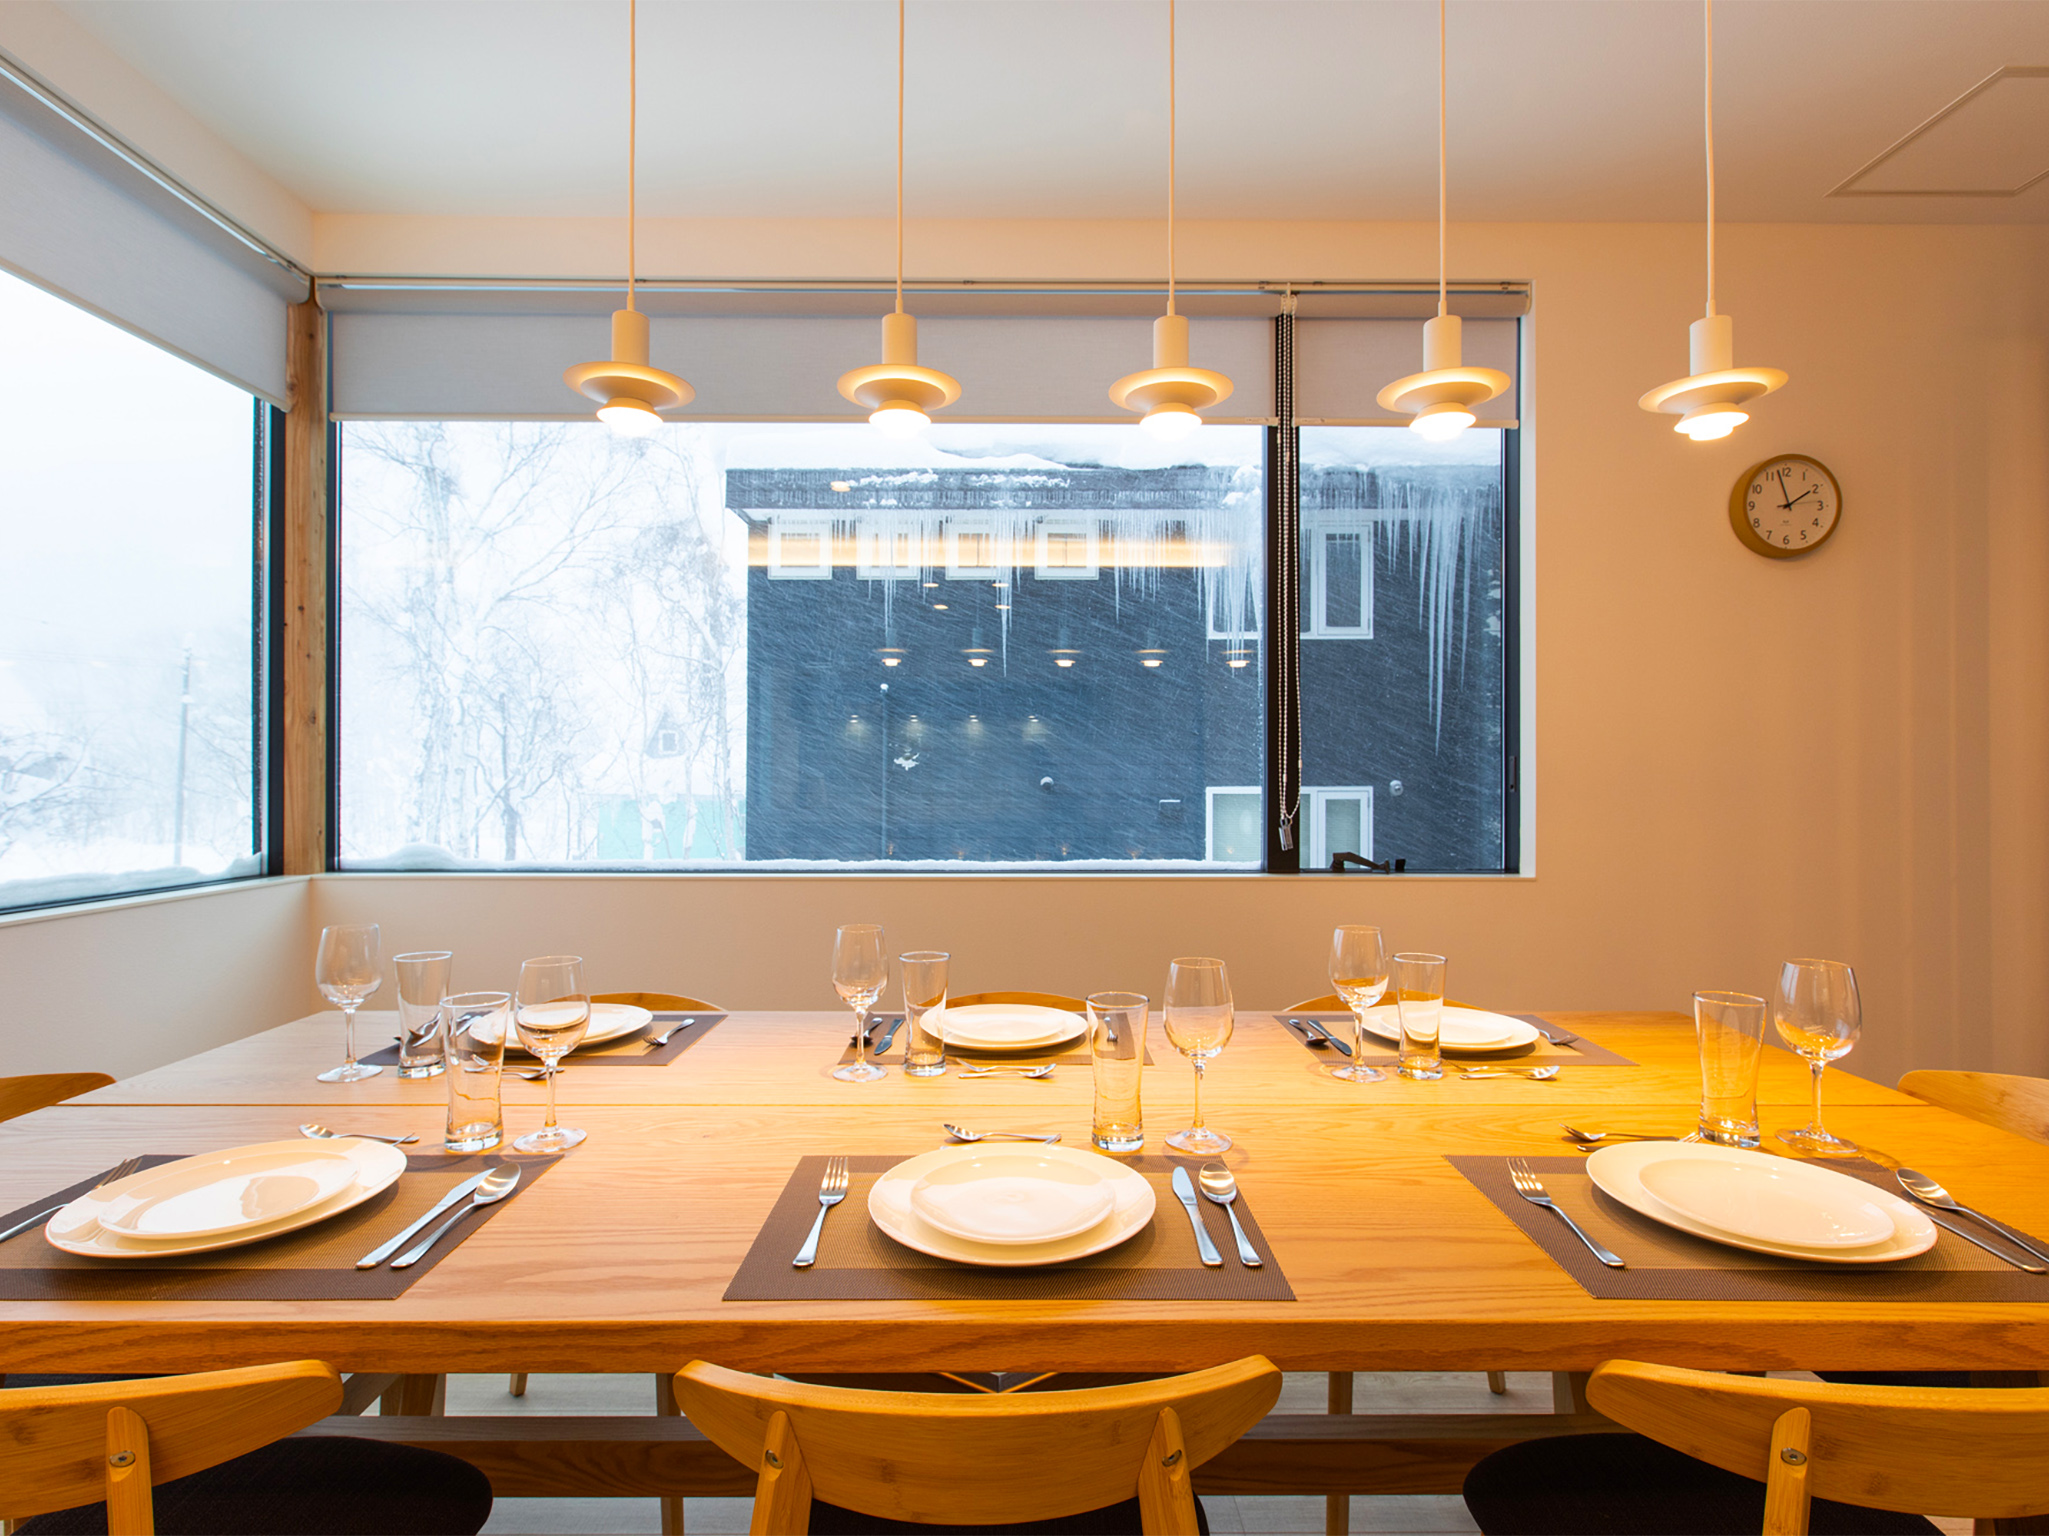 Olaf House - Dining table setting